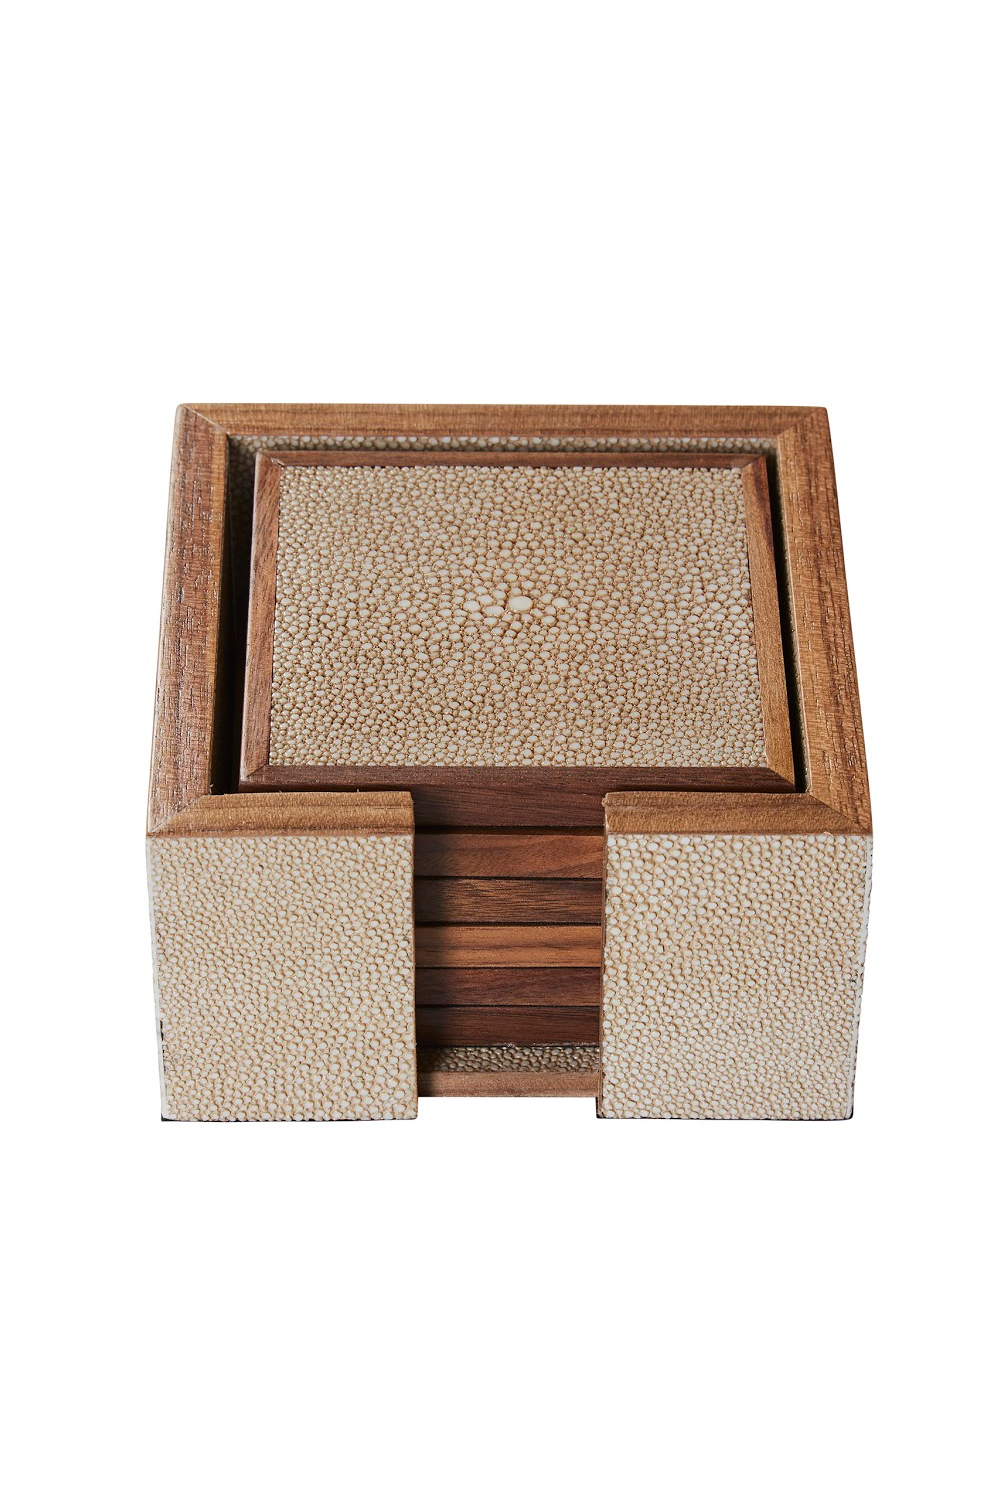 Caja Decorativa Shagreen